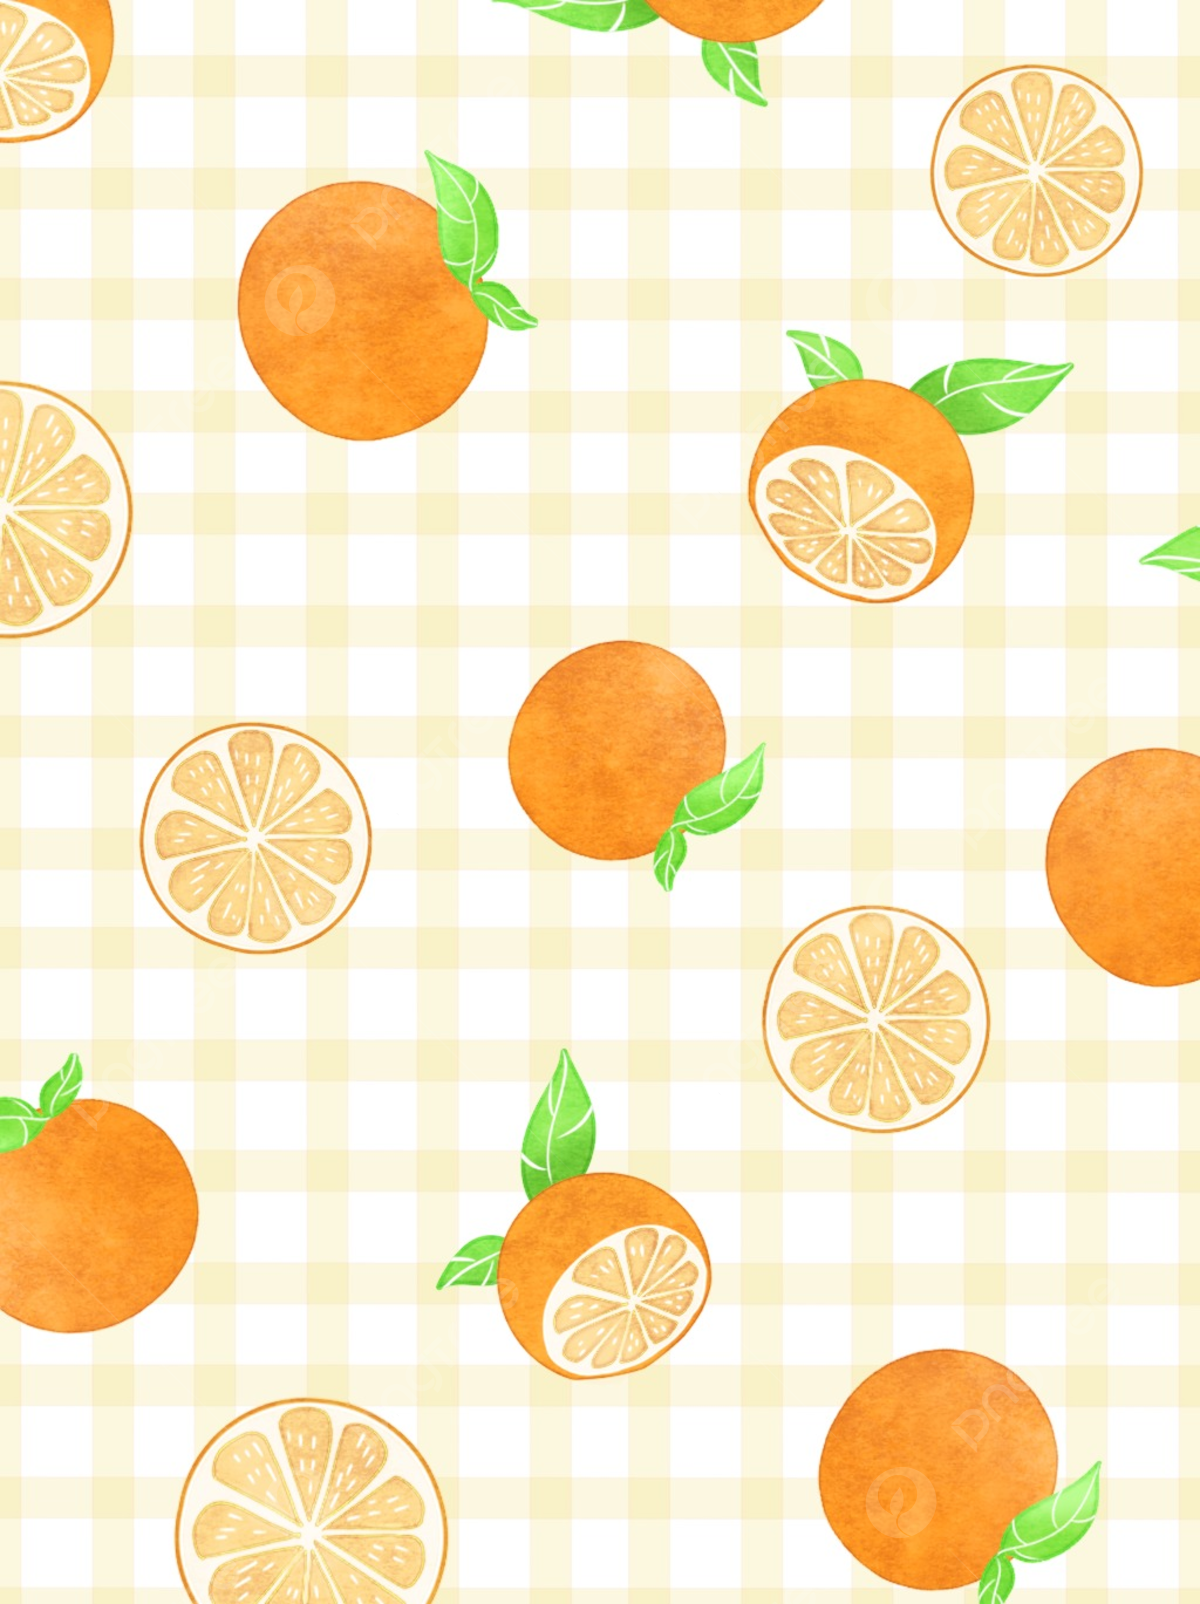 Fresh Cartoon Fruit Orange Background Mobile Phone Desktop Wallpaper Image For Free Download